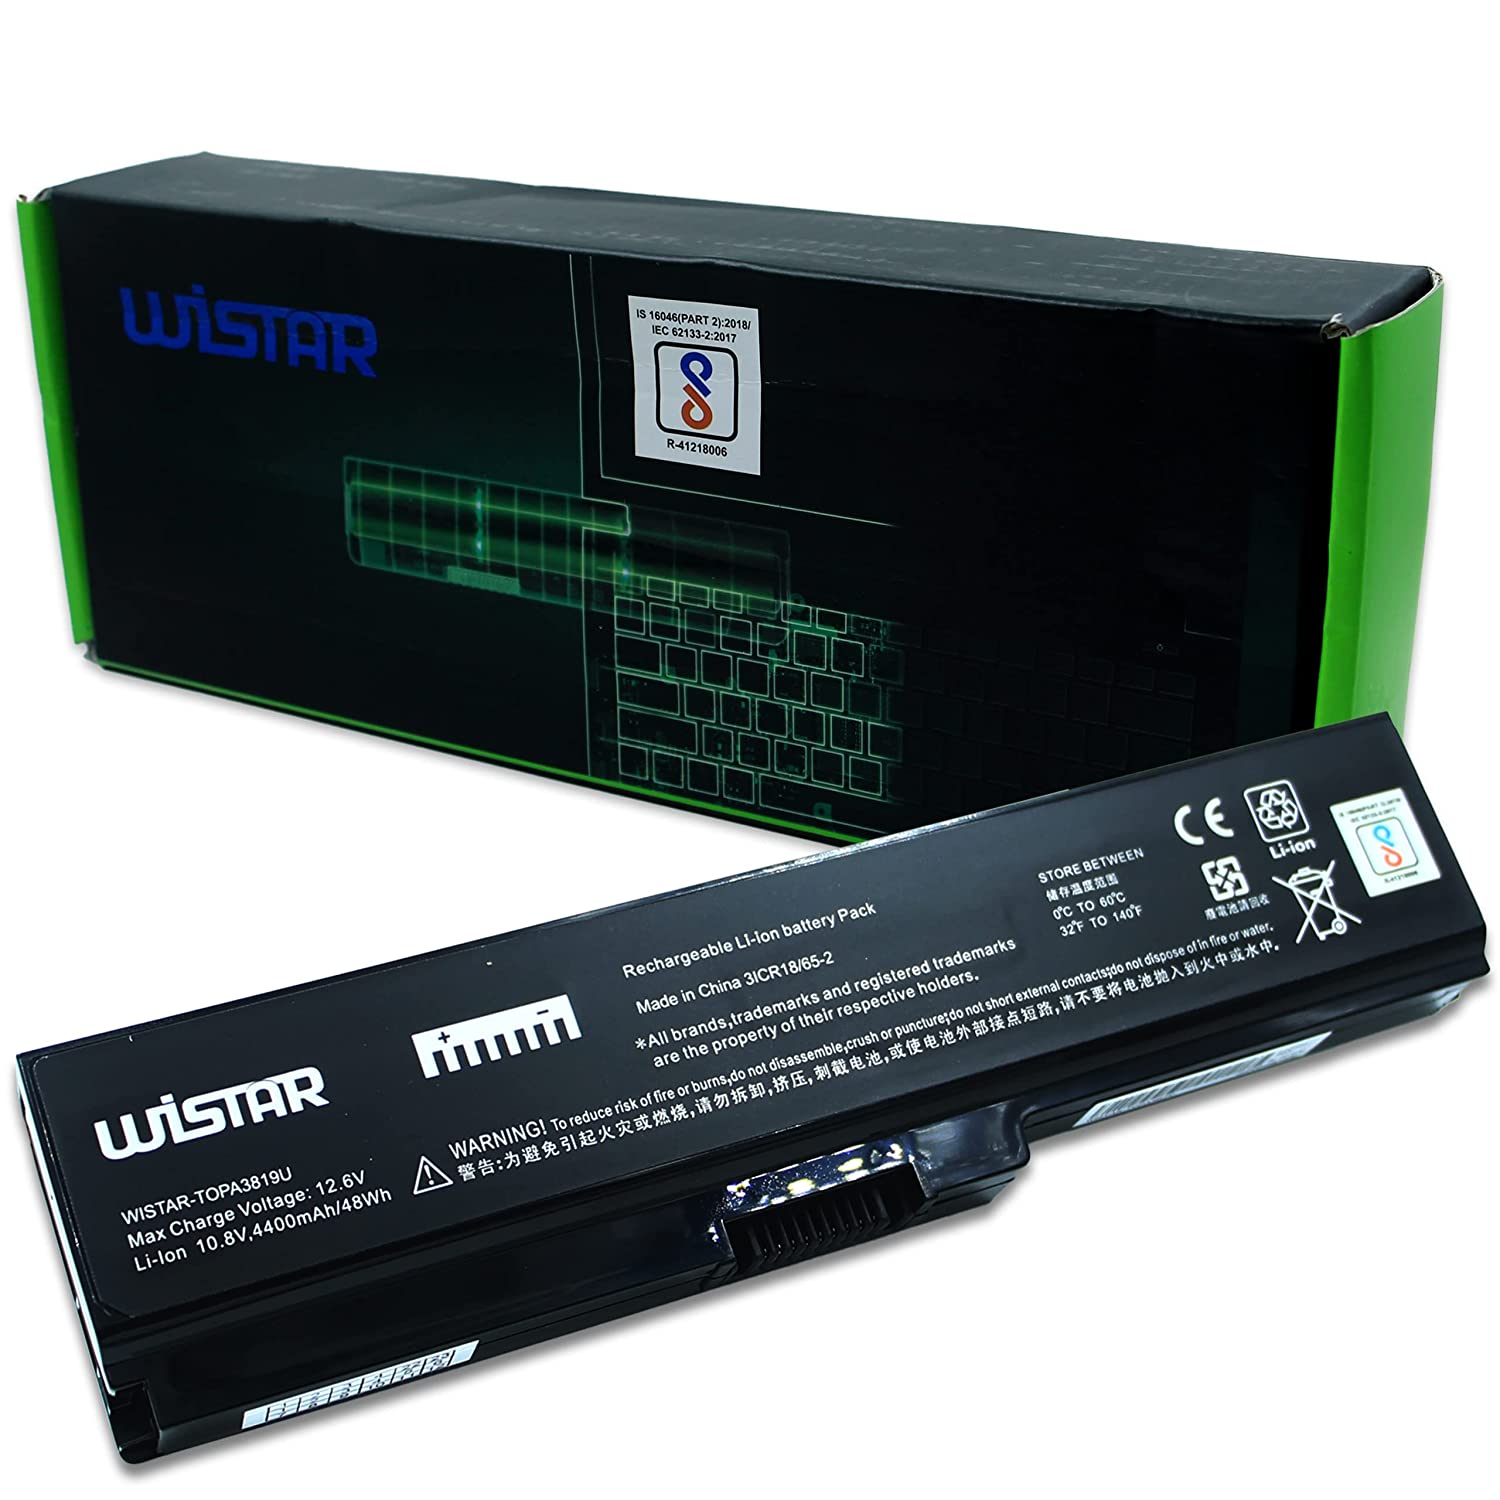 WISTAR Laptop Battery for Toshiba PA3817U-1BRS PA3819U Toshiba Satellite A660 A665 A665D C640 C650 C650D L740 L745 L745D L700 L700D L735 Series